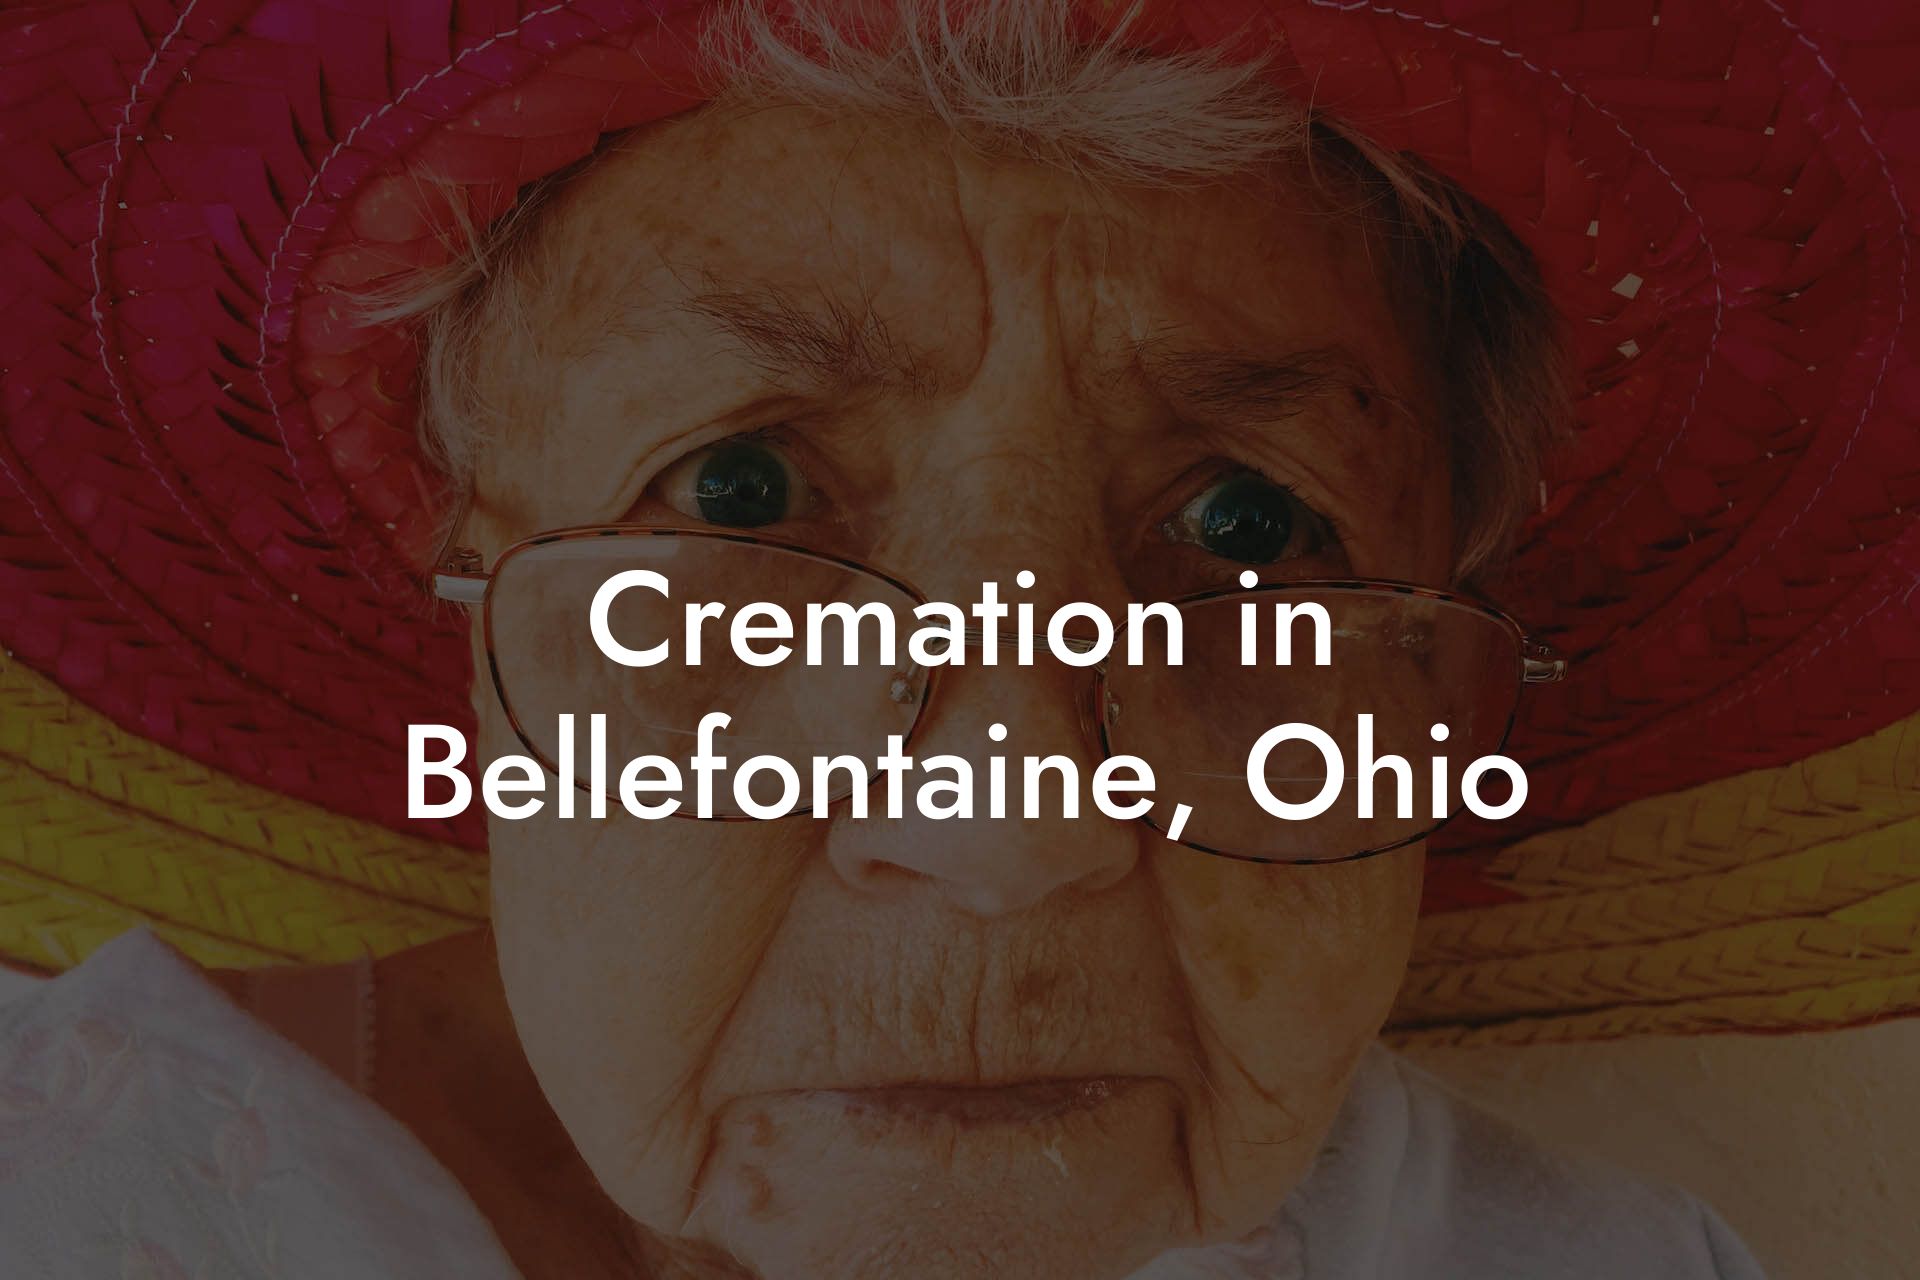 Cremation in Bellefontaine, Ohio